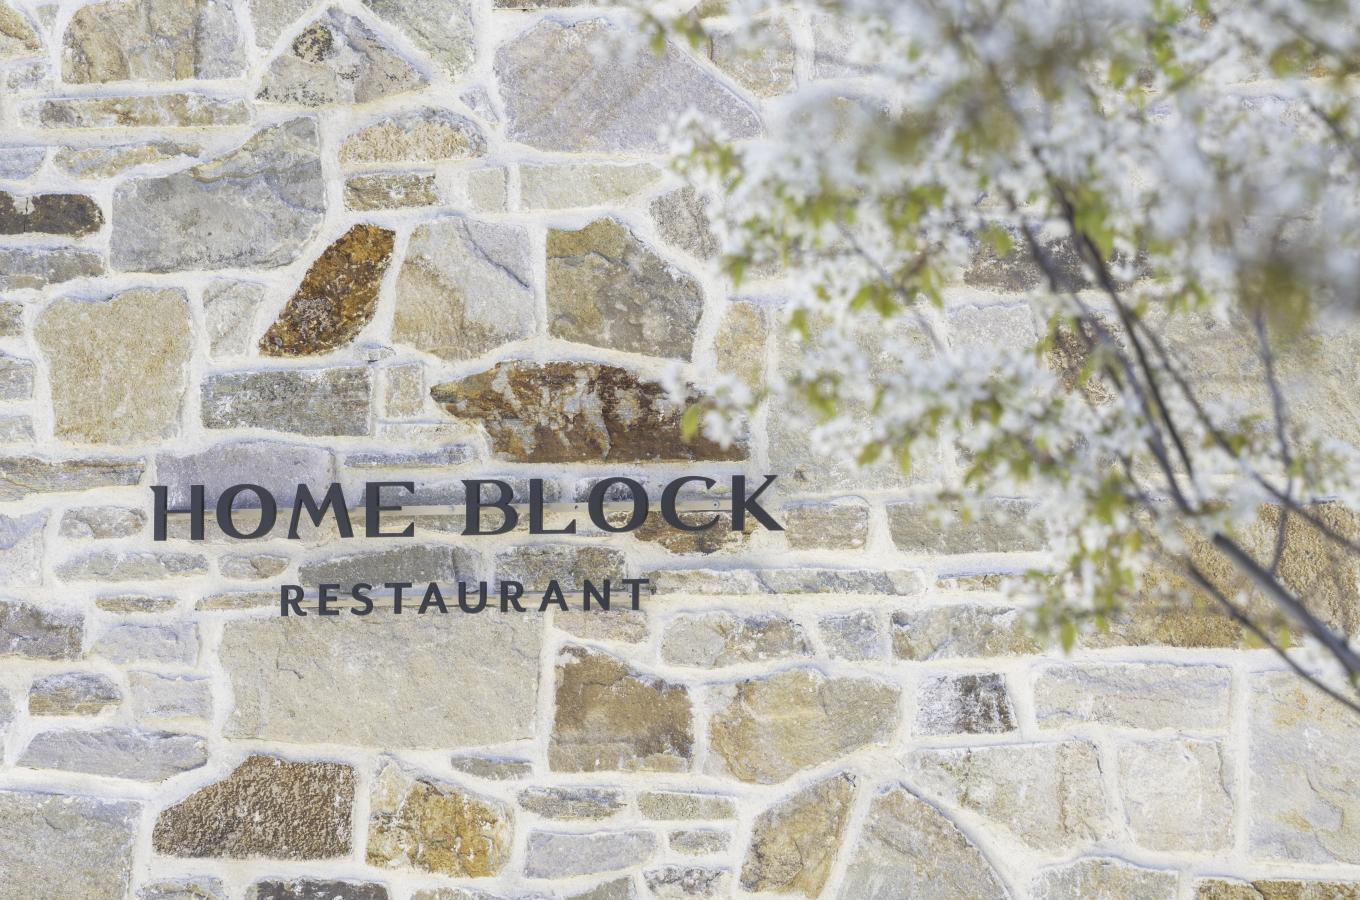 Home Block at CedarCreek Estate Winery - Sign